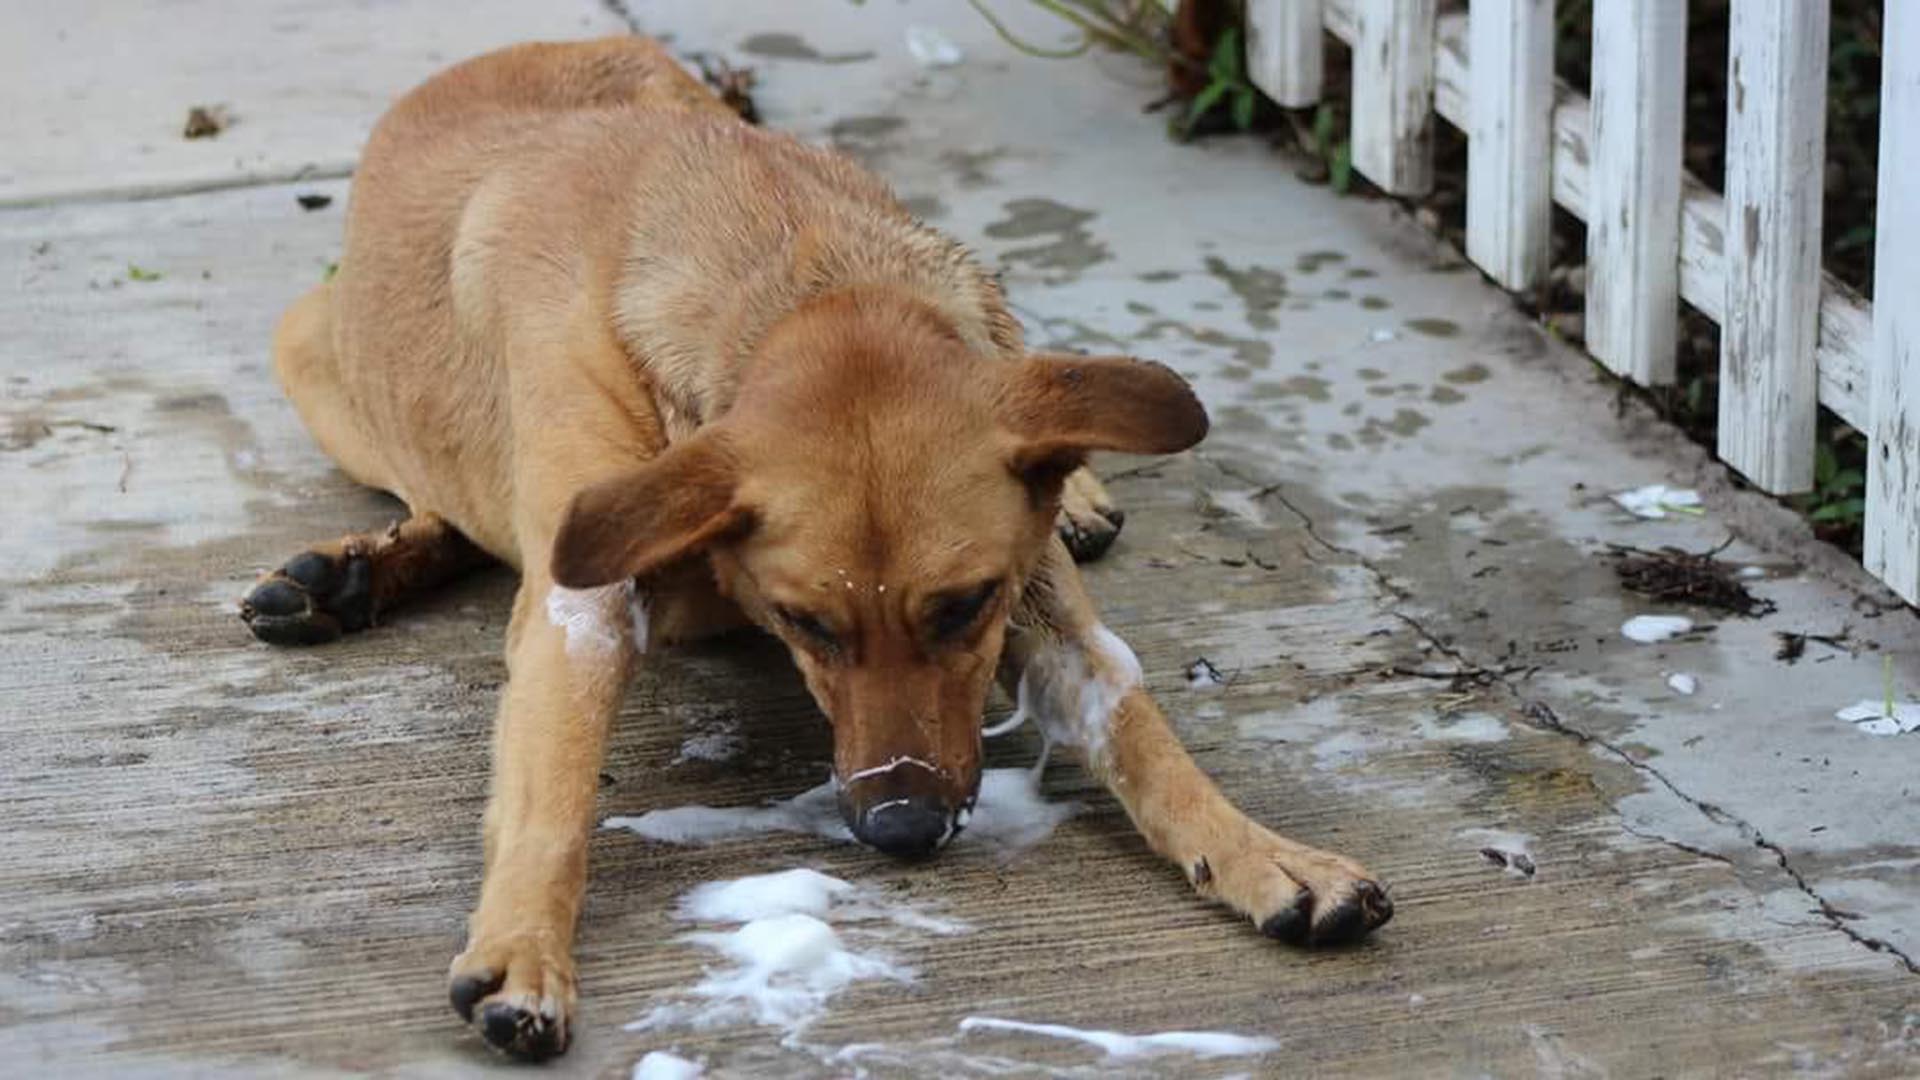 Buscan a "mata perros" en Tequisquiapan. Foto: Internet de carácter informativo.